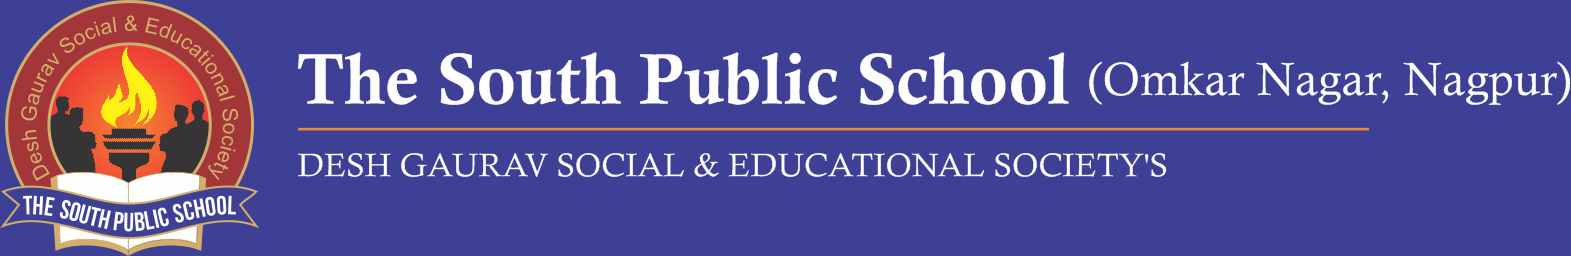 The South Public School